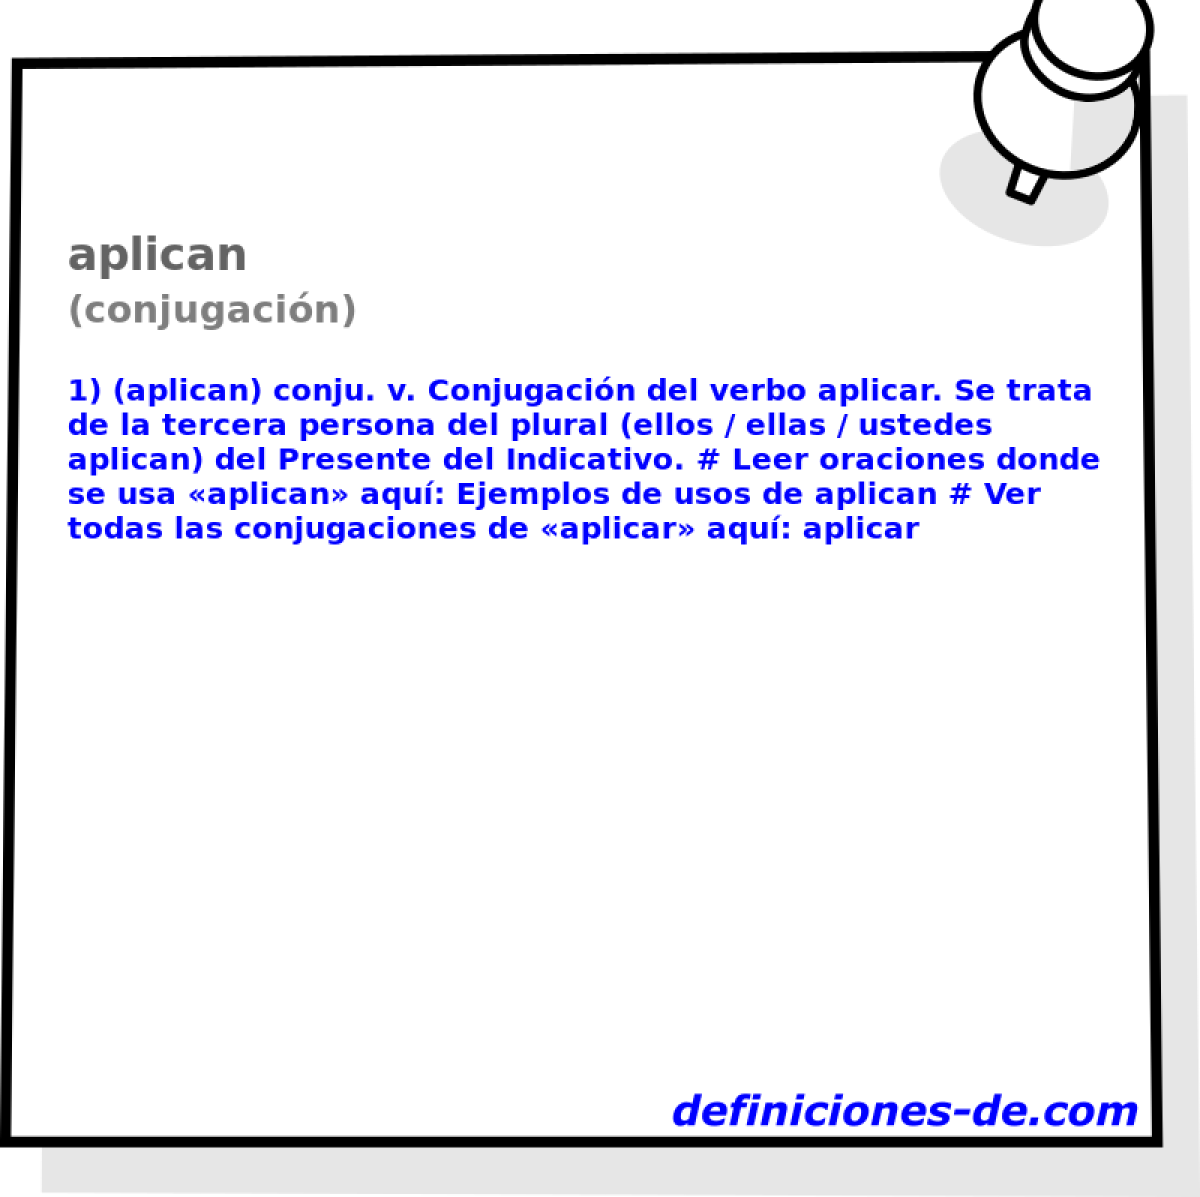 aplican (conjugacin)